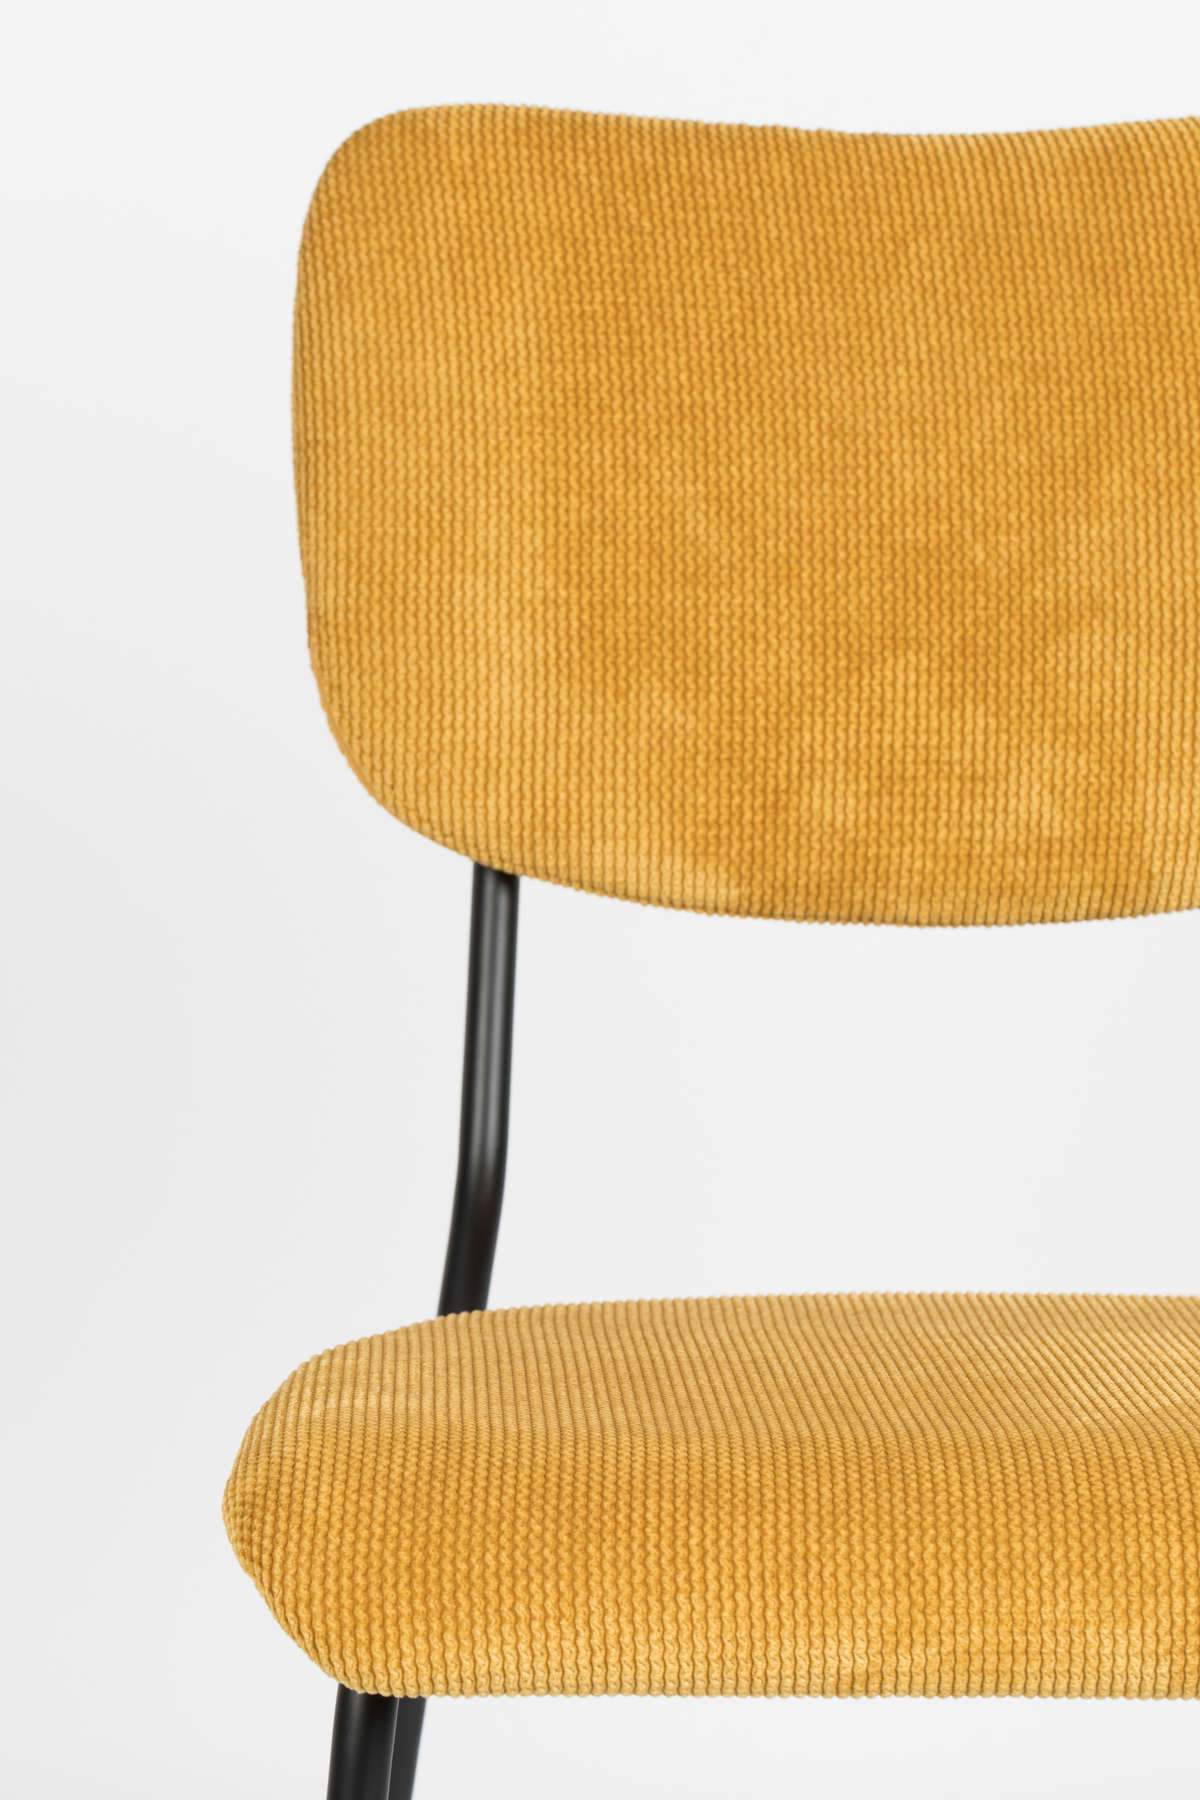 BENSON chair mustard, Zuiver, Eye on Design